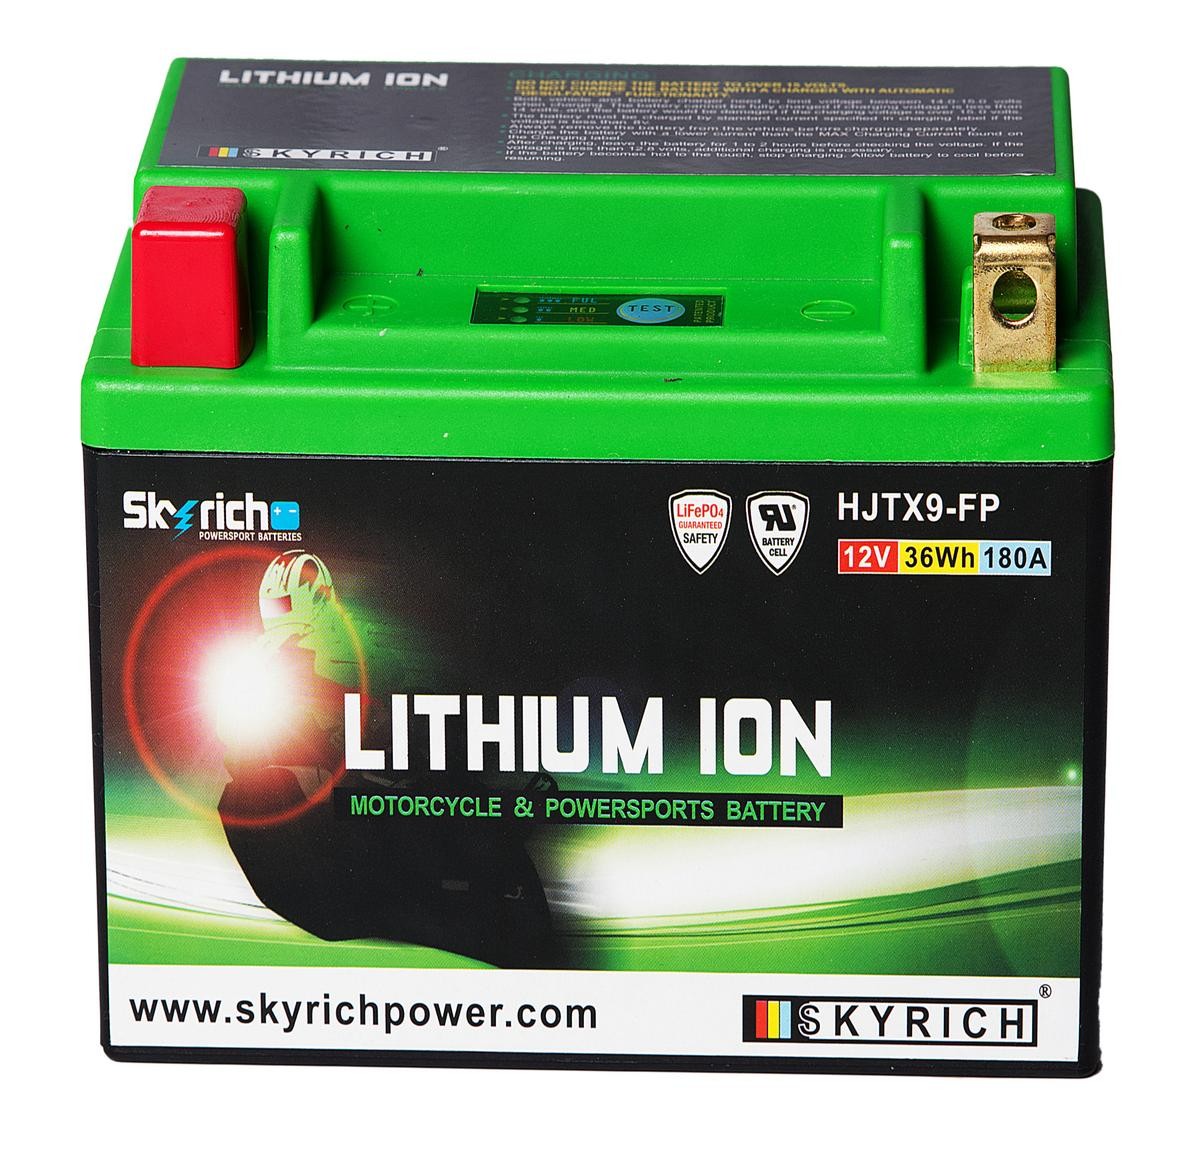 SKYRICH LITHIUM ION Batterie 12V 3Ah 180A N Li-Ionen-Batterie HJTX9-FP BMW Mofa Maxi-Scooter